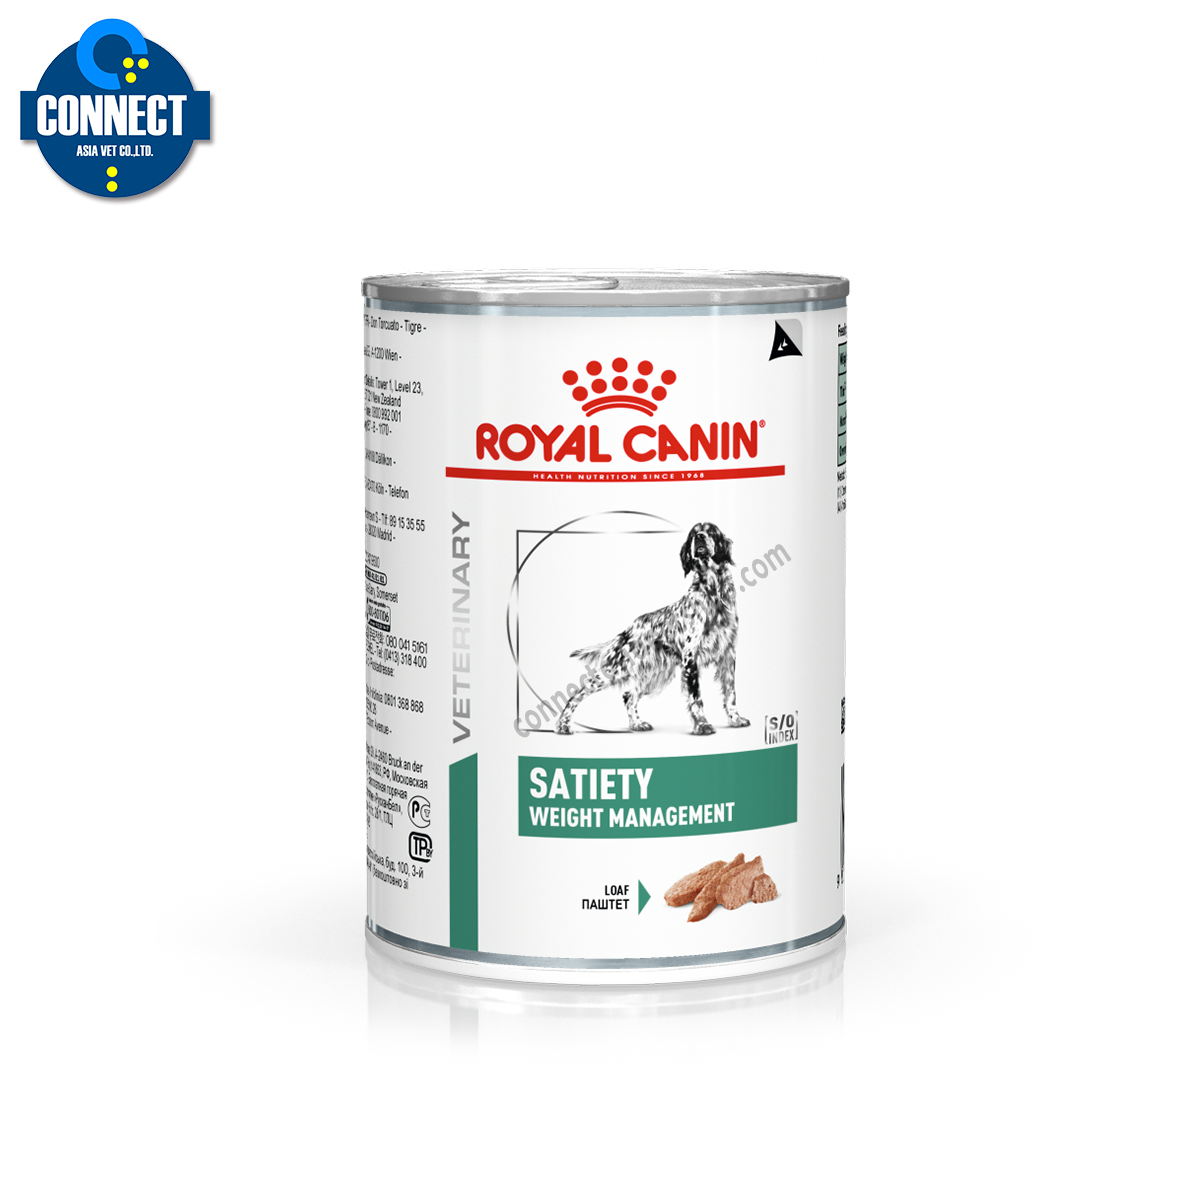 Royal Canin SATIETY WEIGHT MANAGEMENT ขนาดกระป๋อง 400 กรัม